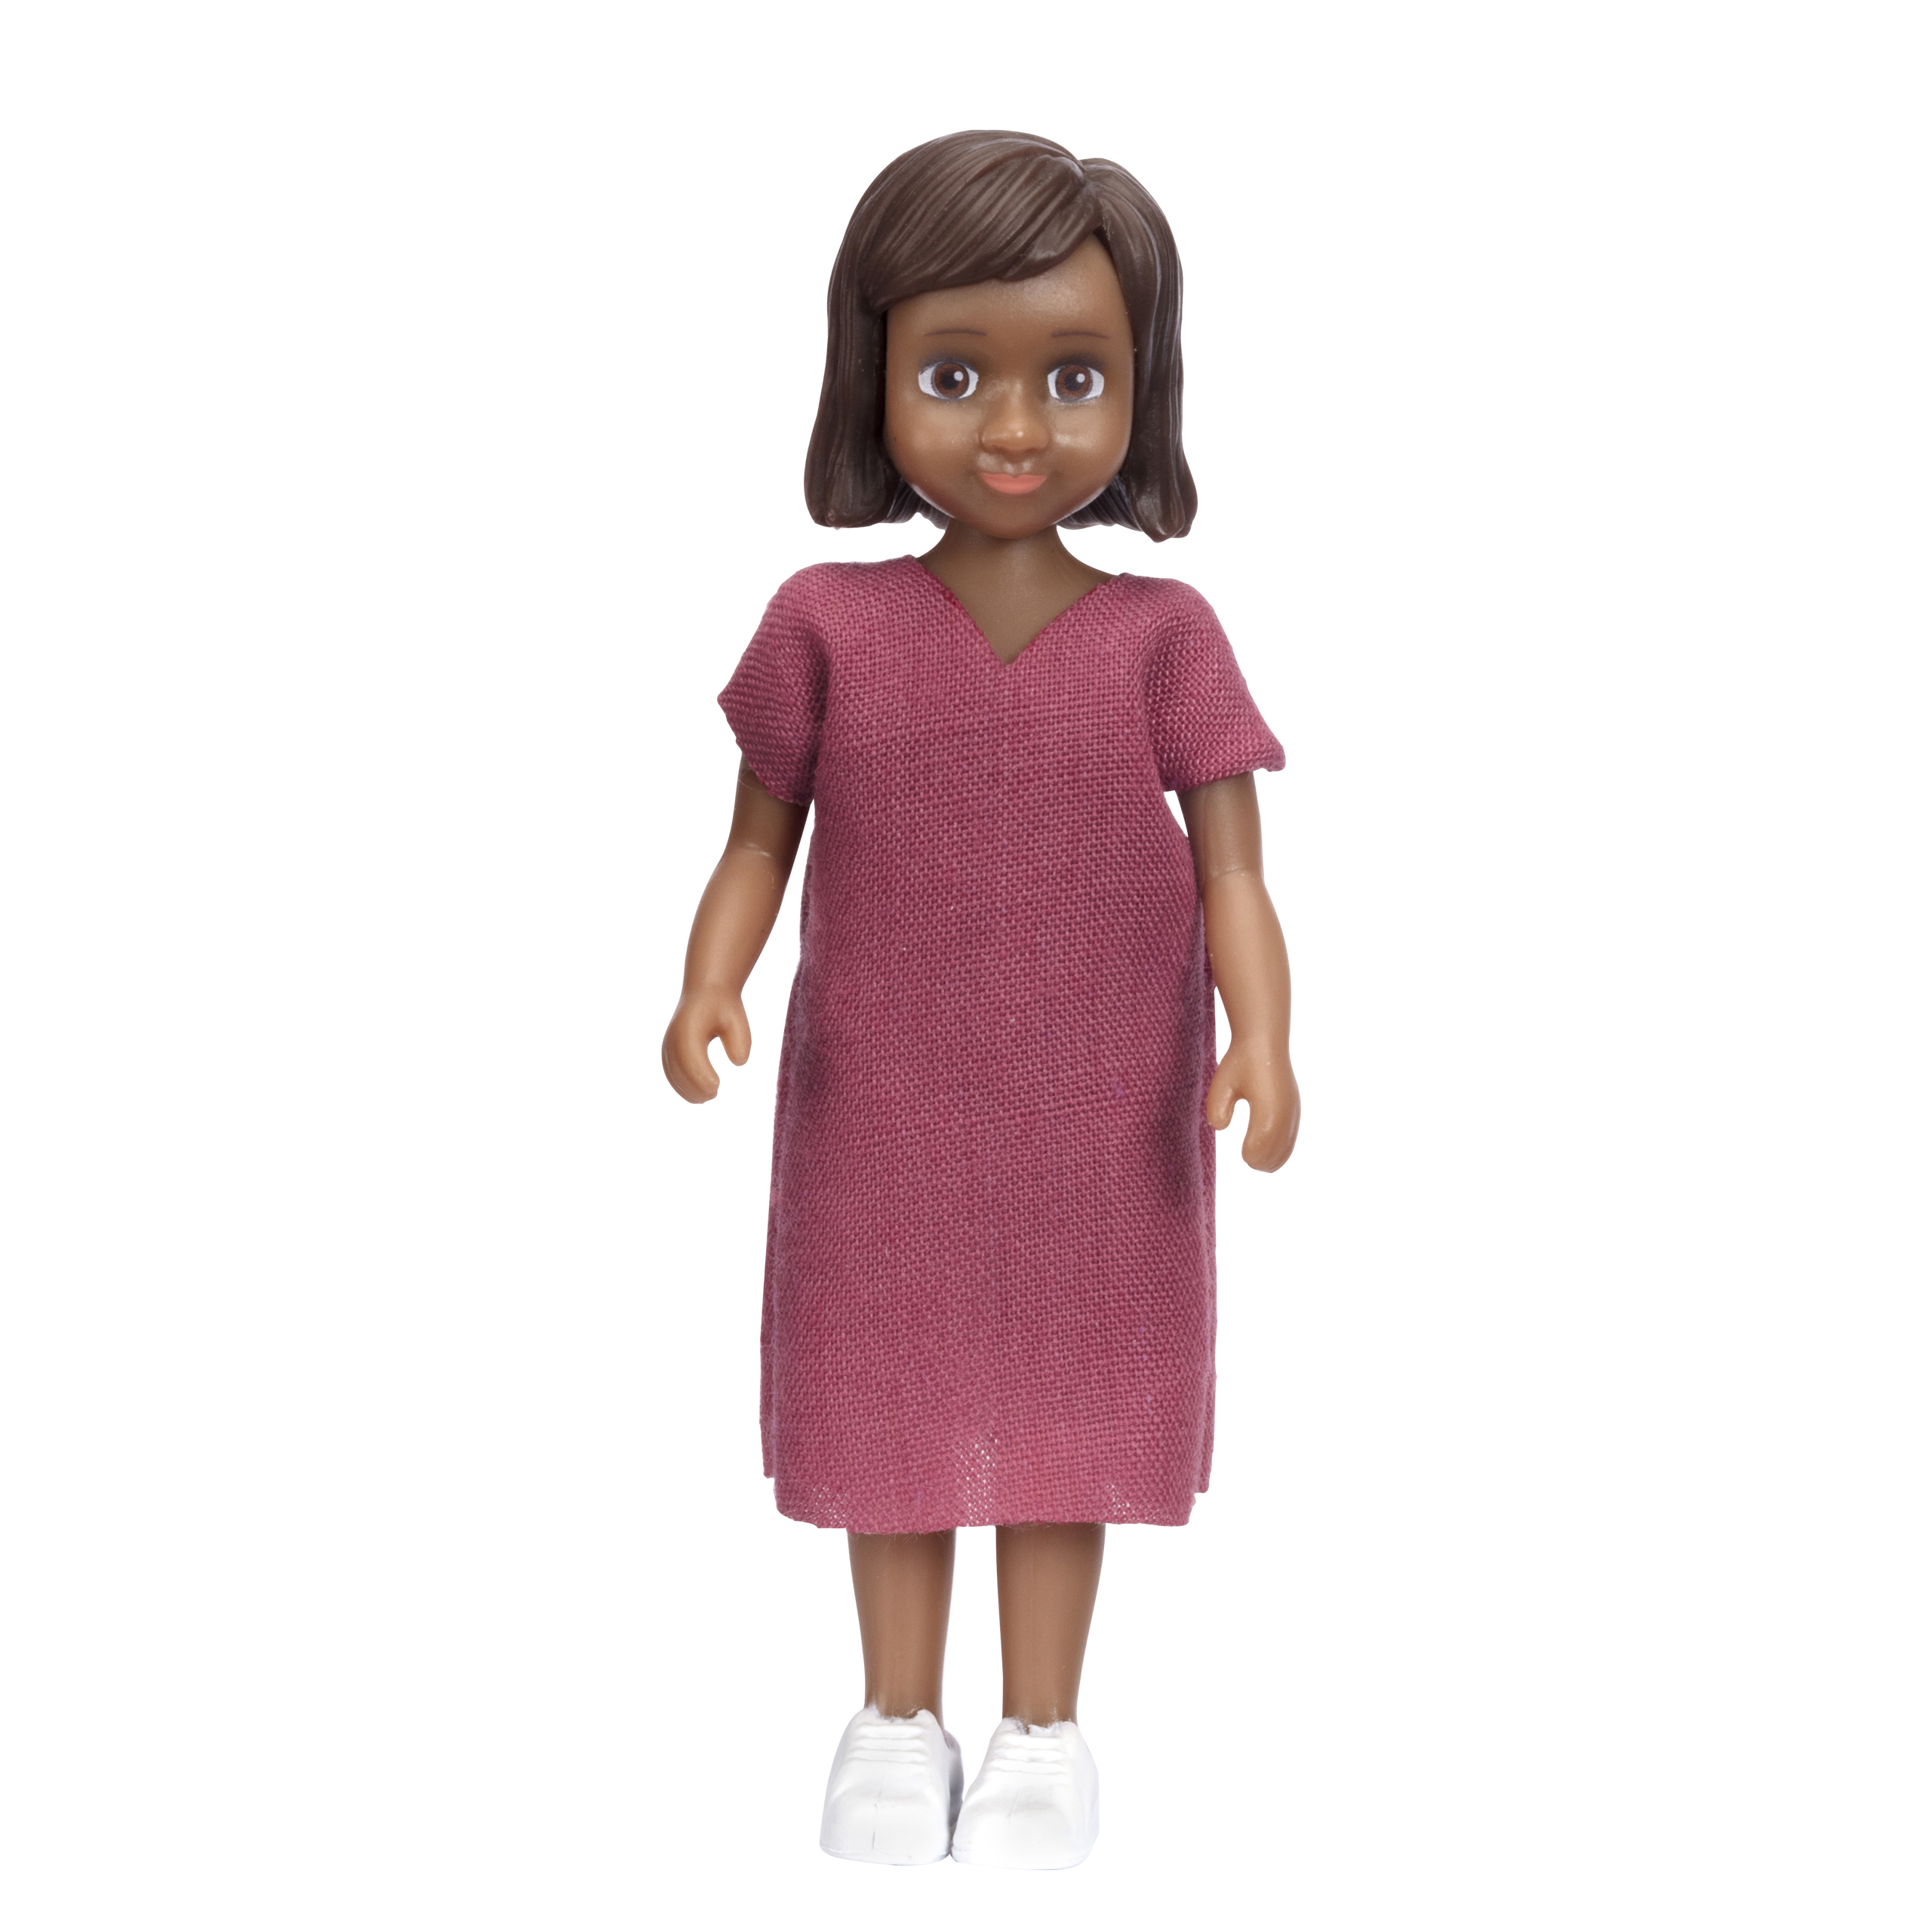 Dark-skinned dolls lundby dollhouse doll nikki girl